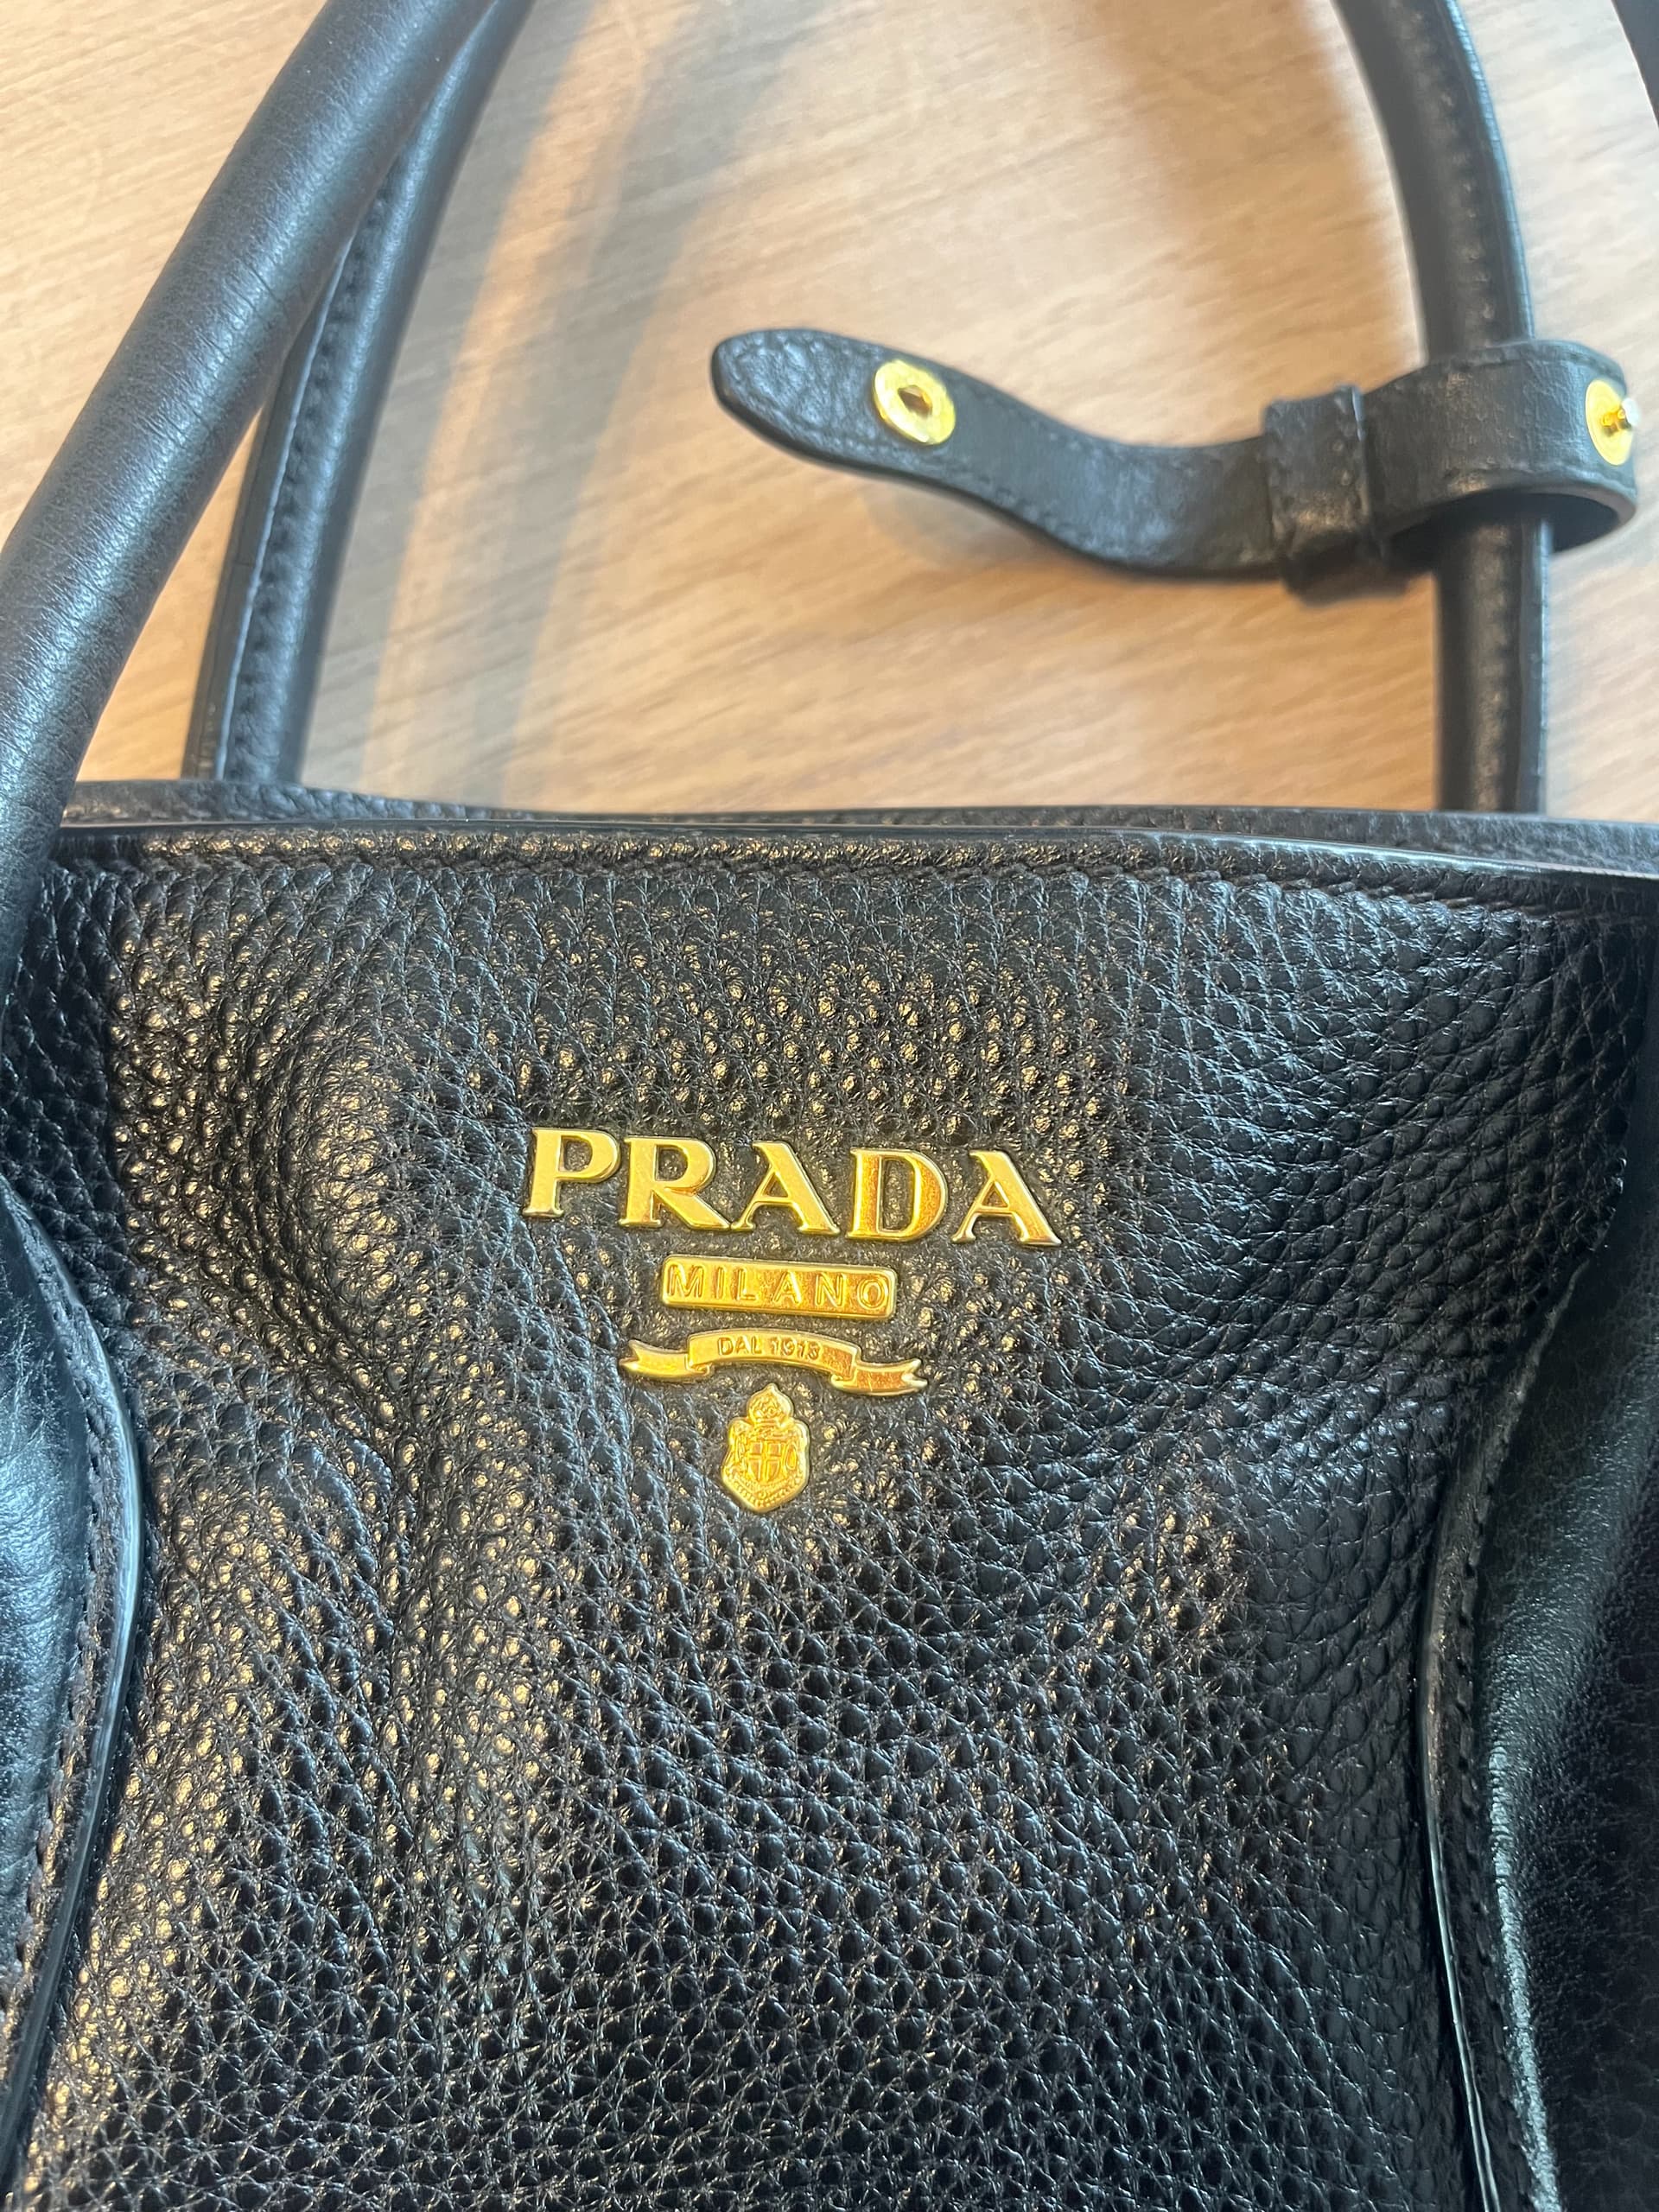 Boston Medium Leather Tote Bag in Grey - Prada